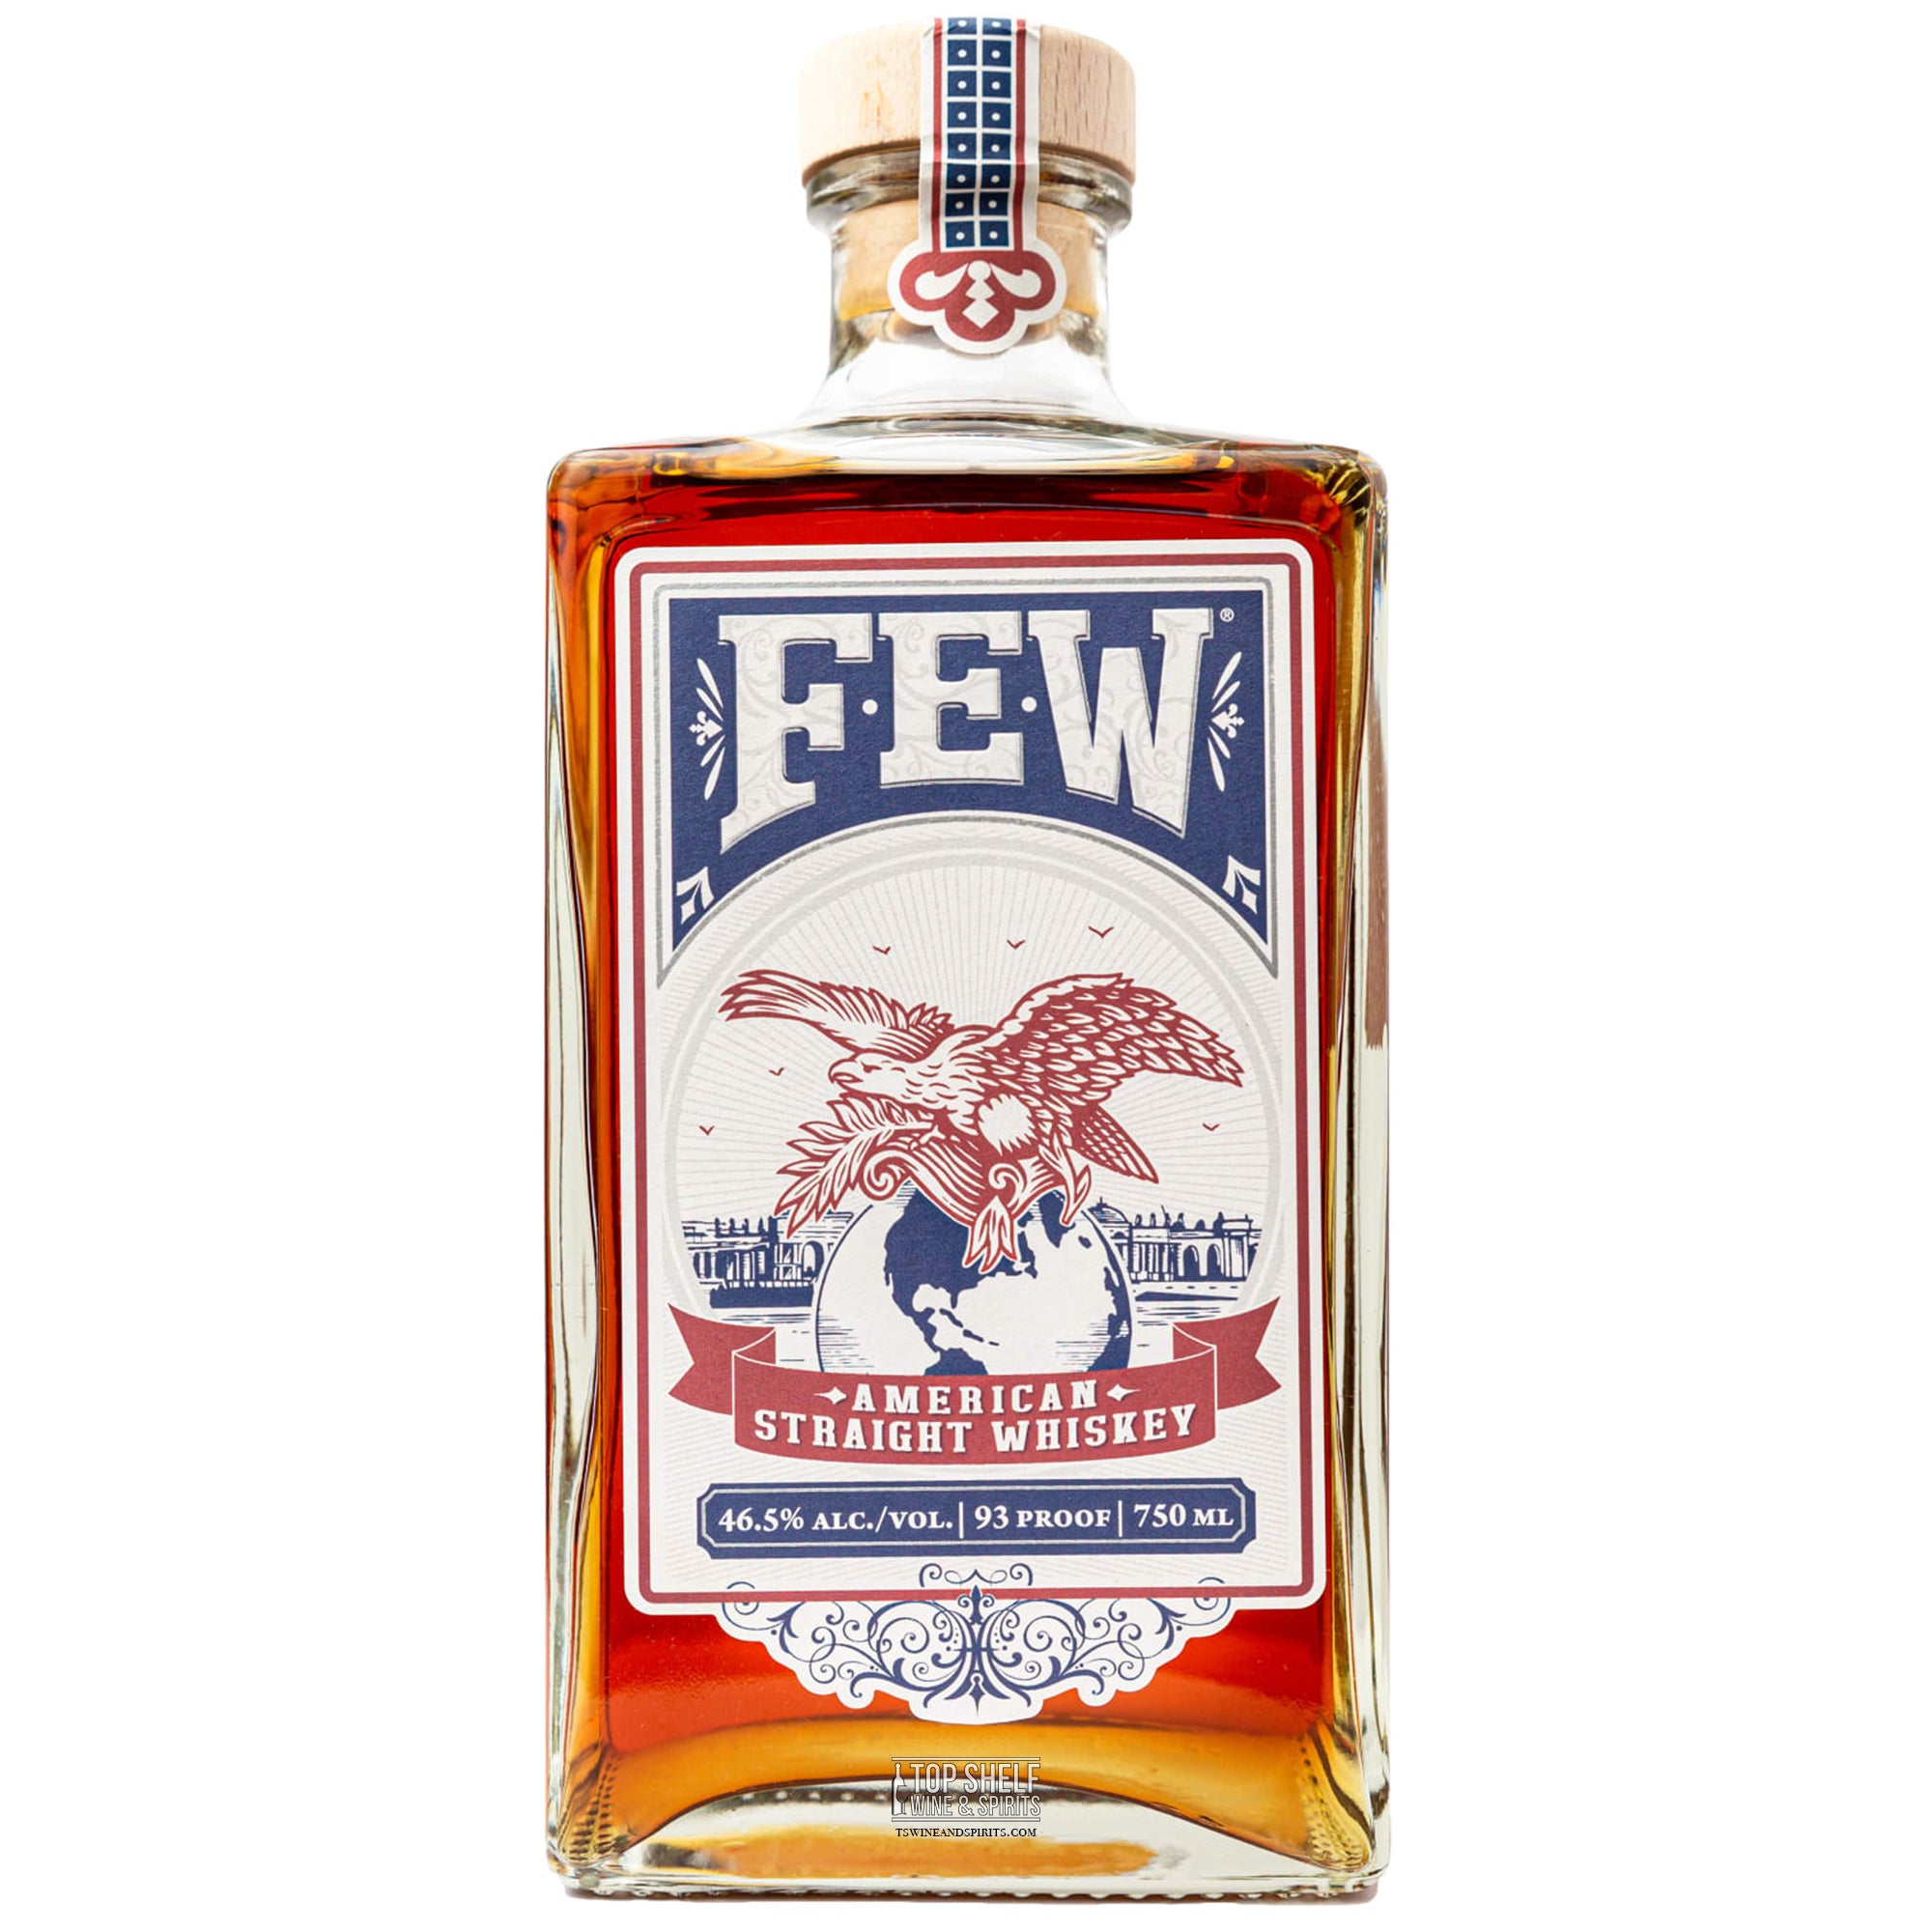 FEW American Whiskey